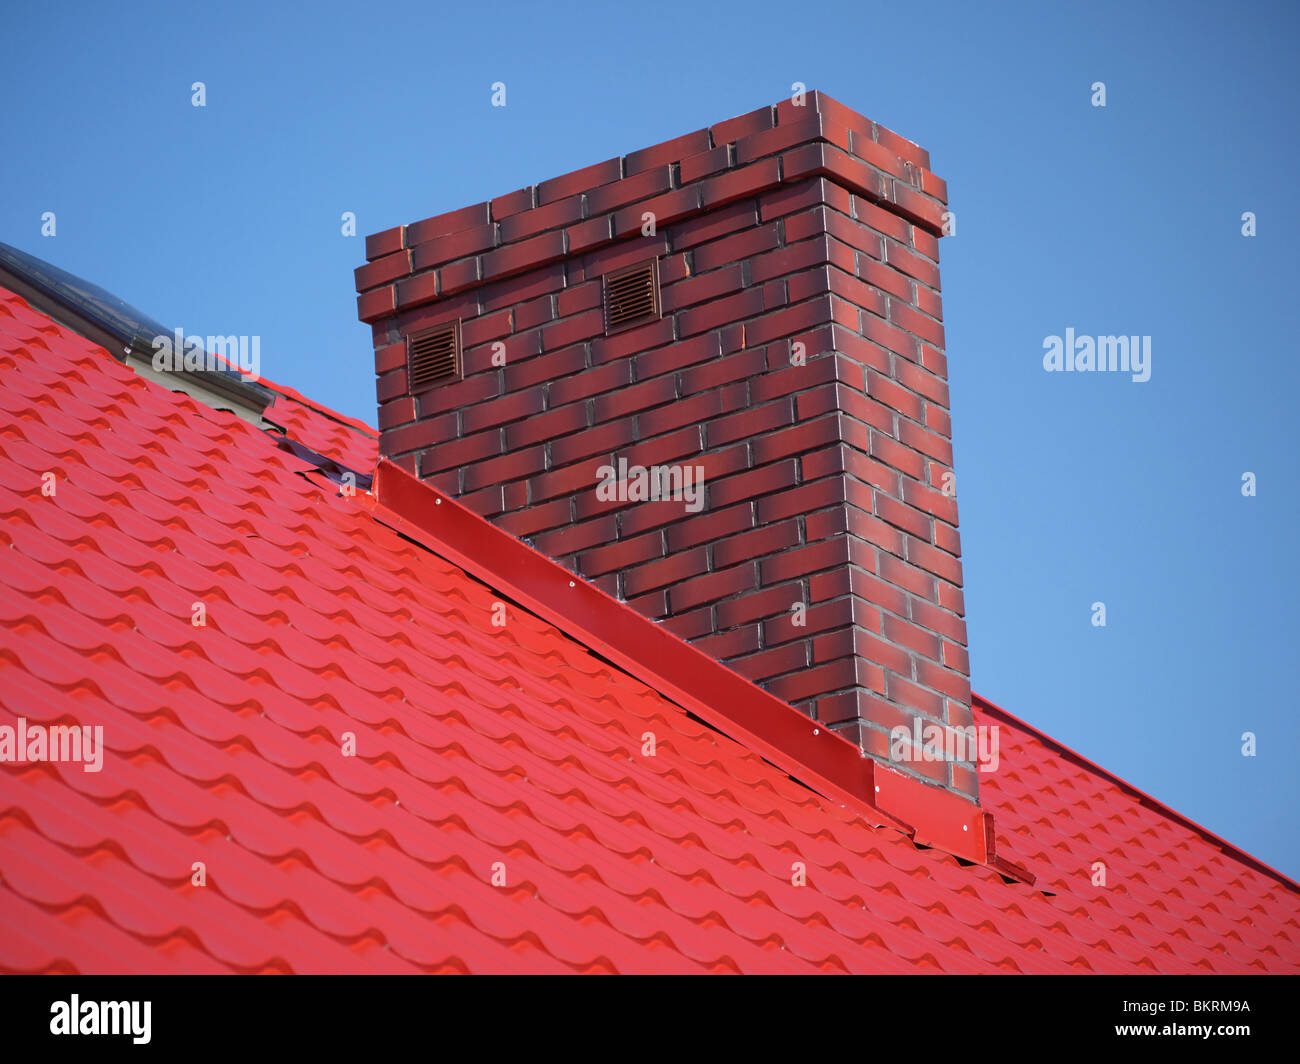 Primer plano de techo rojo metal cubriendo con chimenea de ladrillo Foto de stock